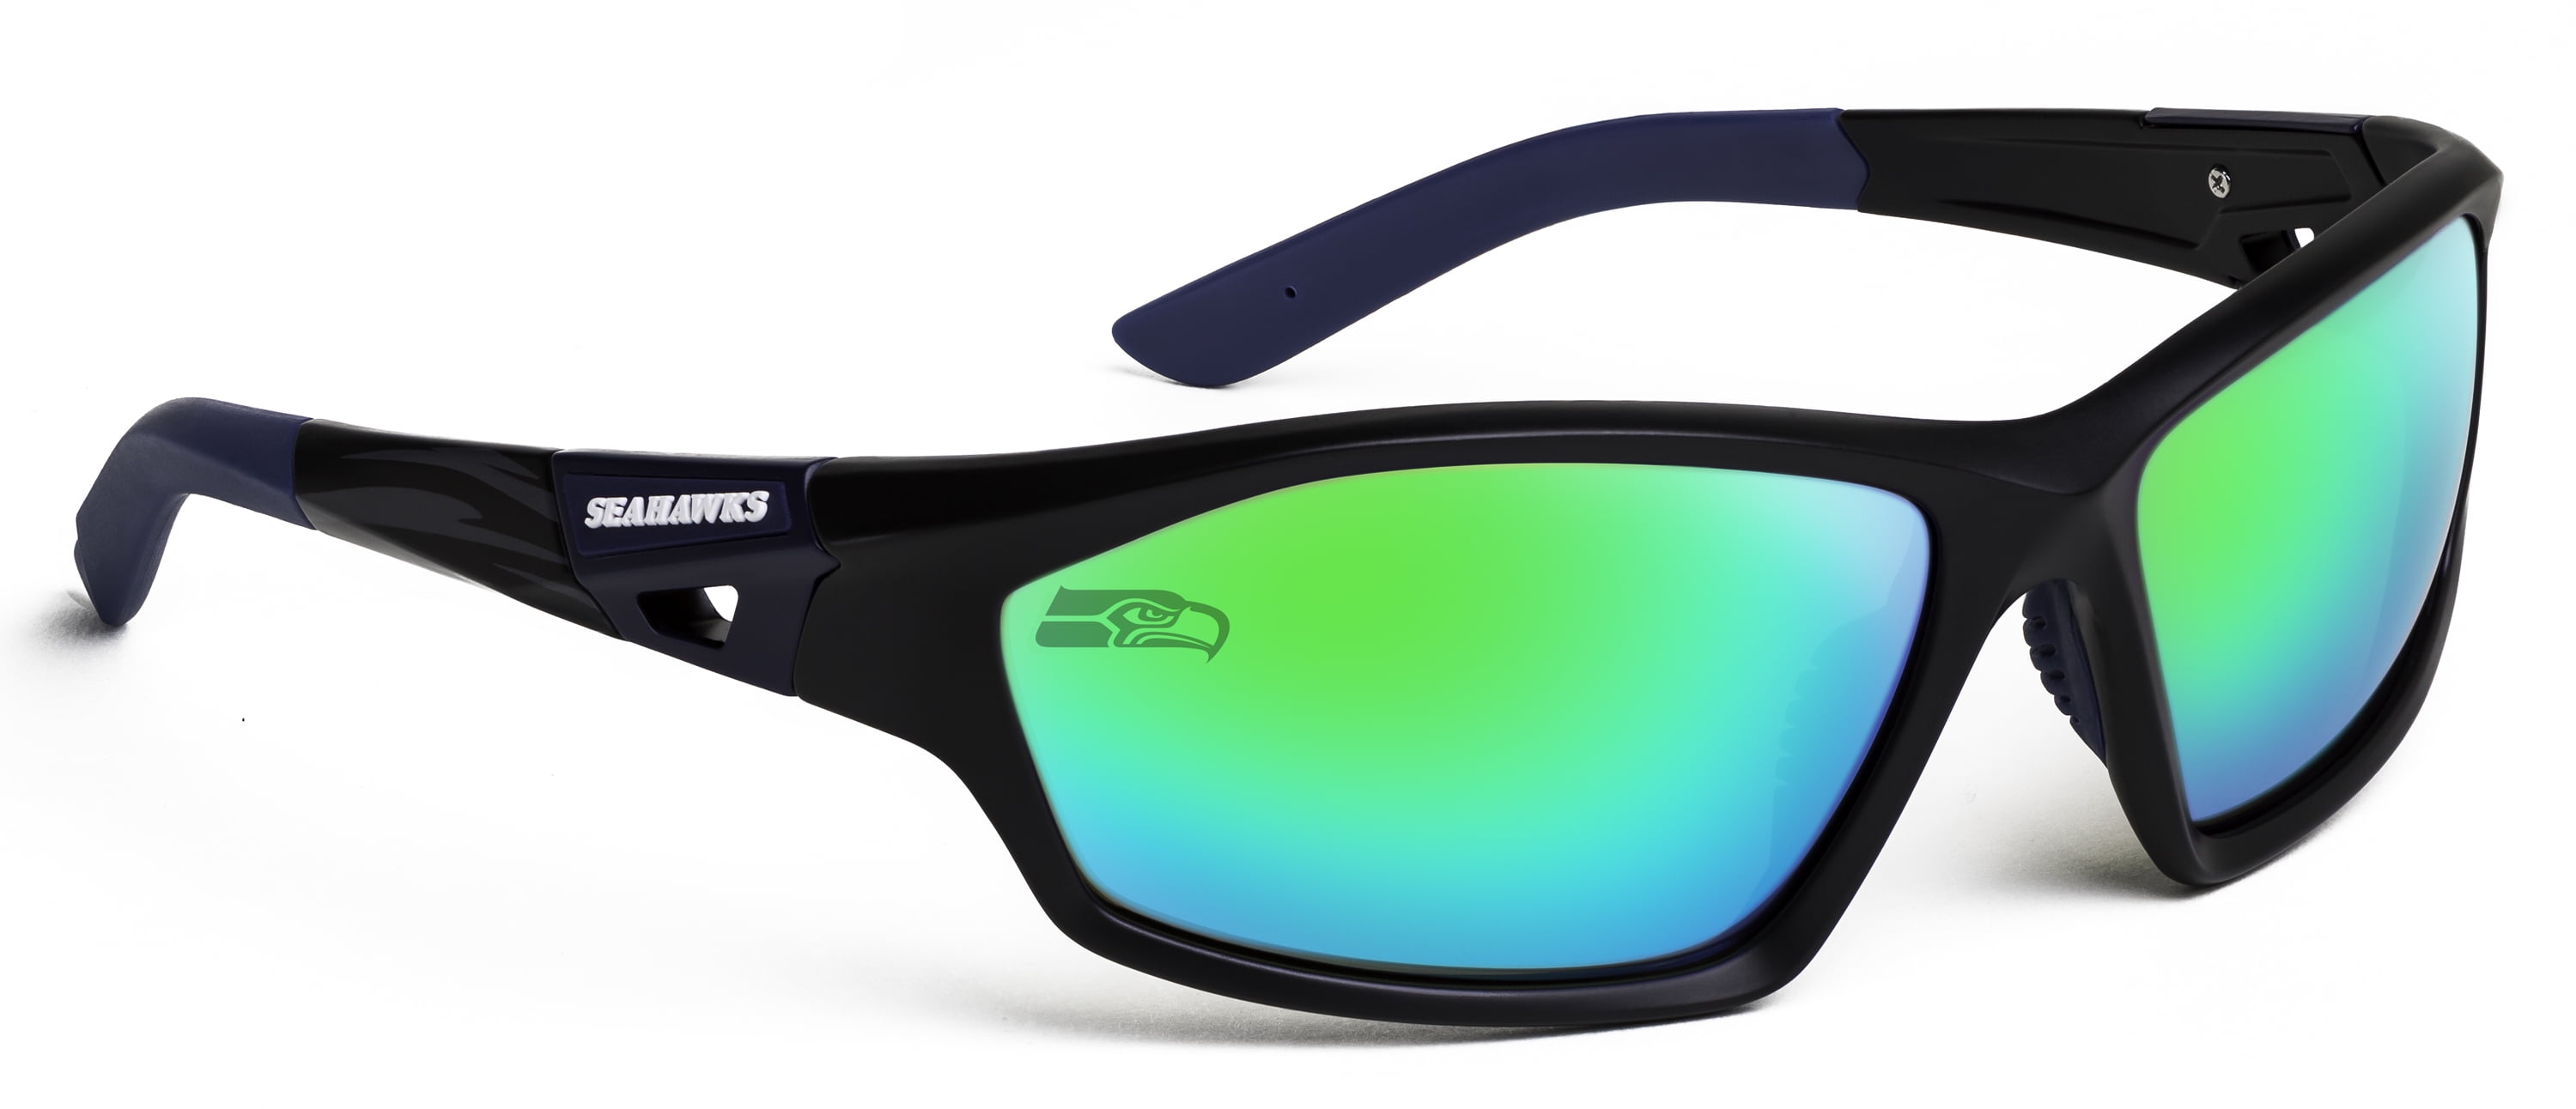 NFL Seattle Seahawks Premium NFL Sunglasses, Lateral Style - Walmart.com